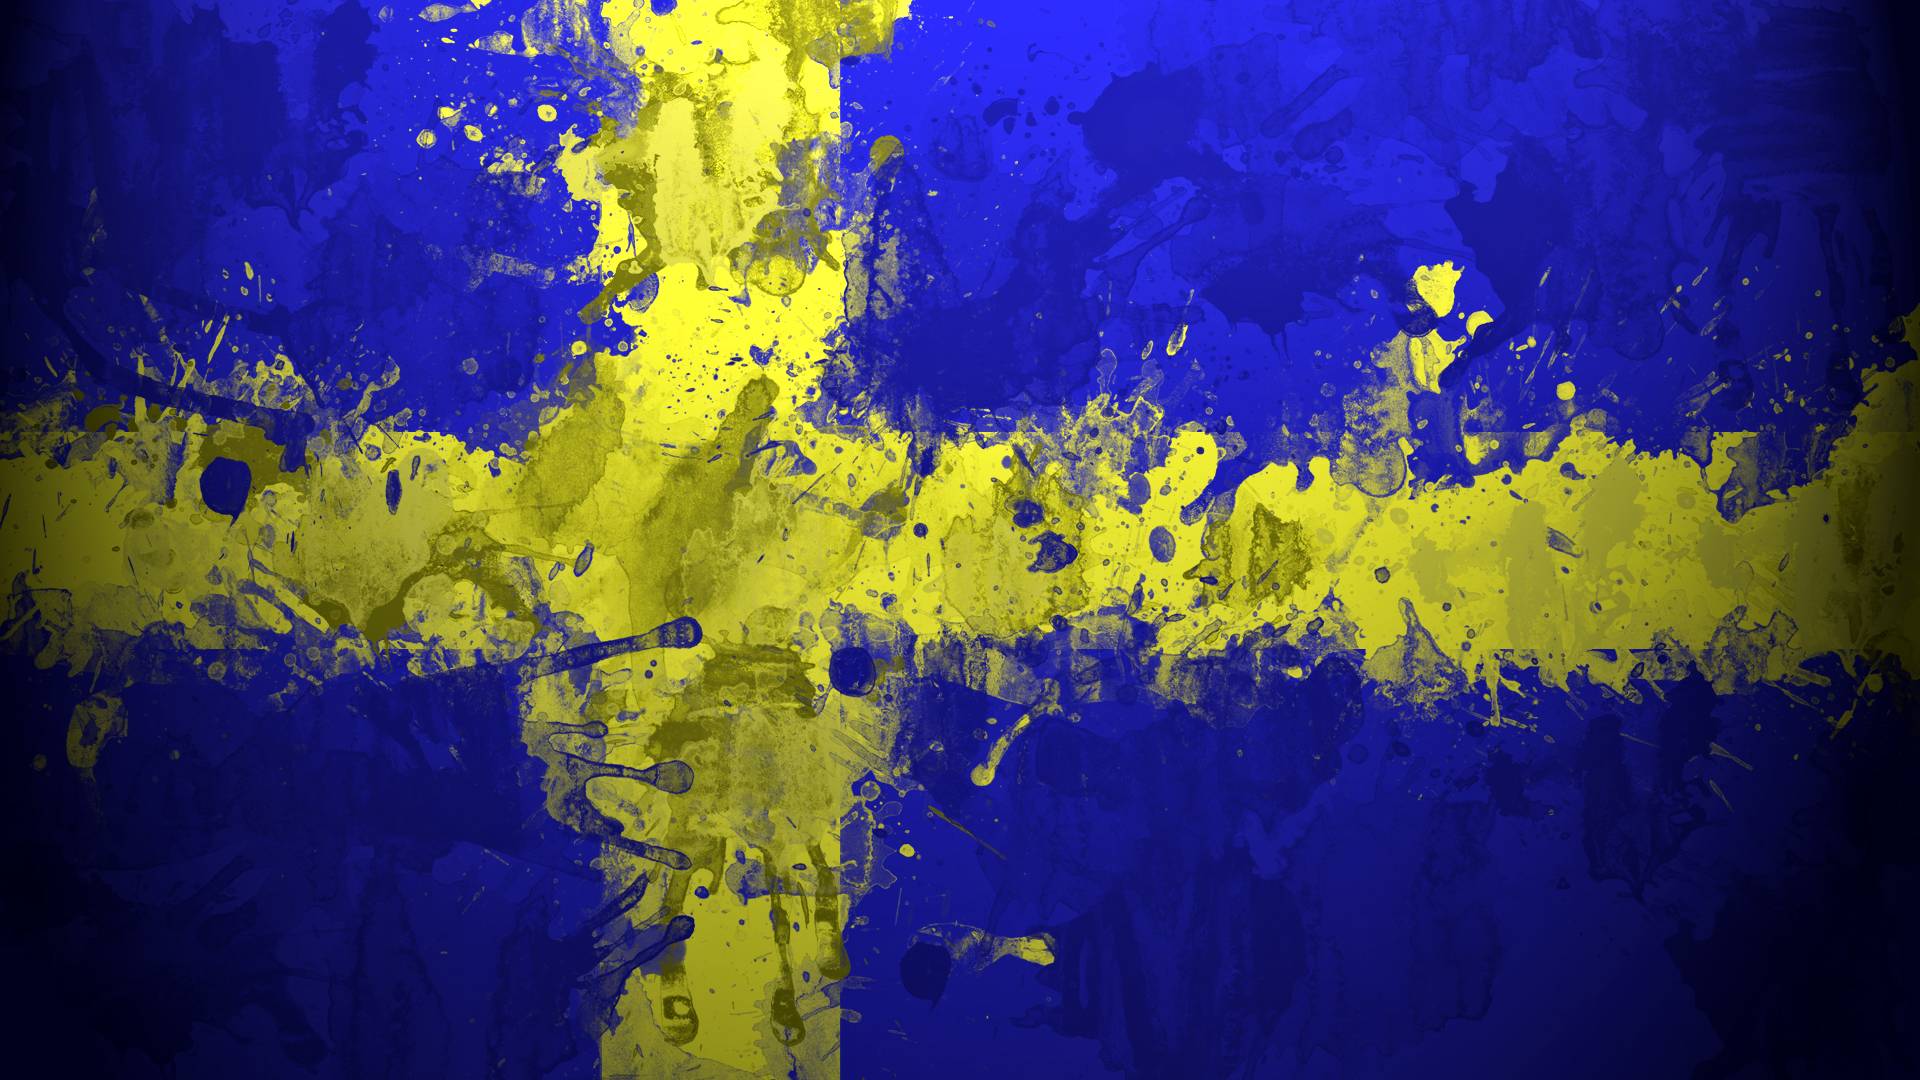 Swedish Flag Wallpaper 1920x1080 Download